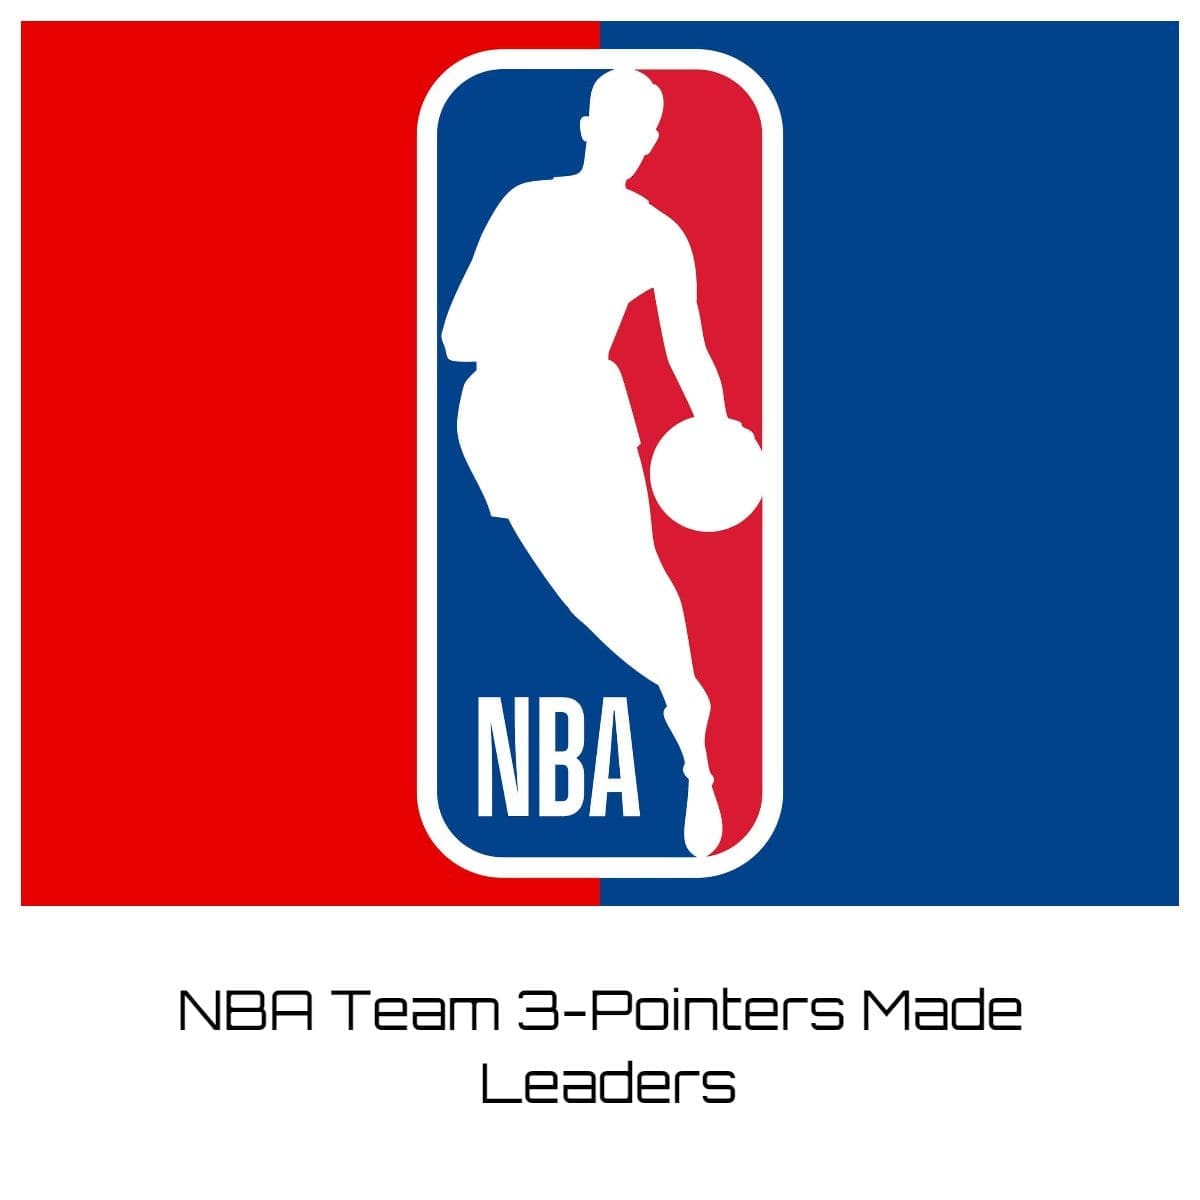 NBA Team 3-Pointers Made Leaders